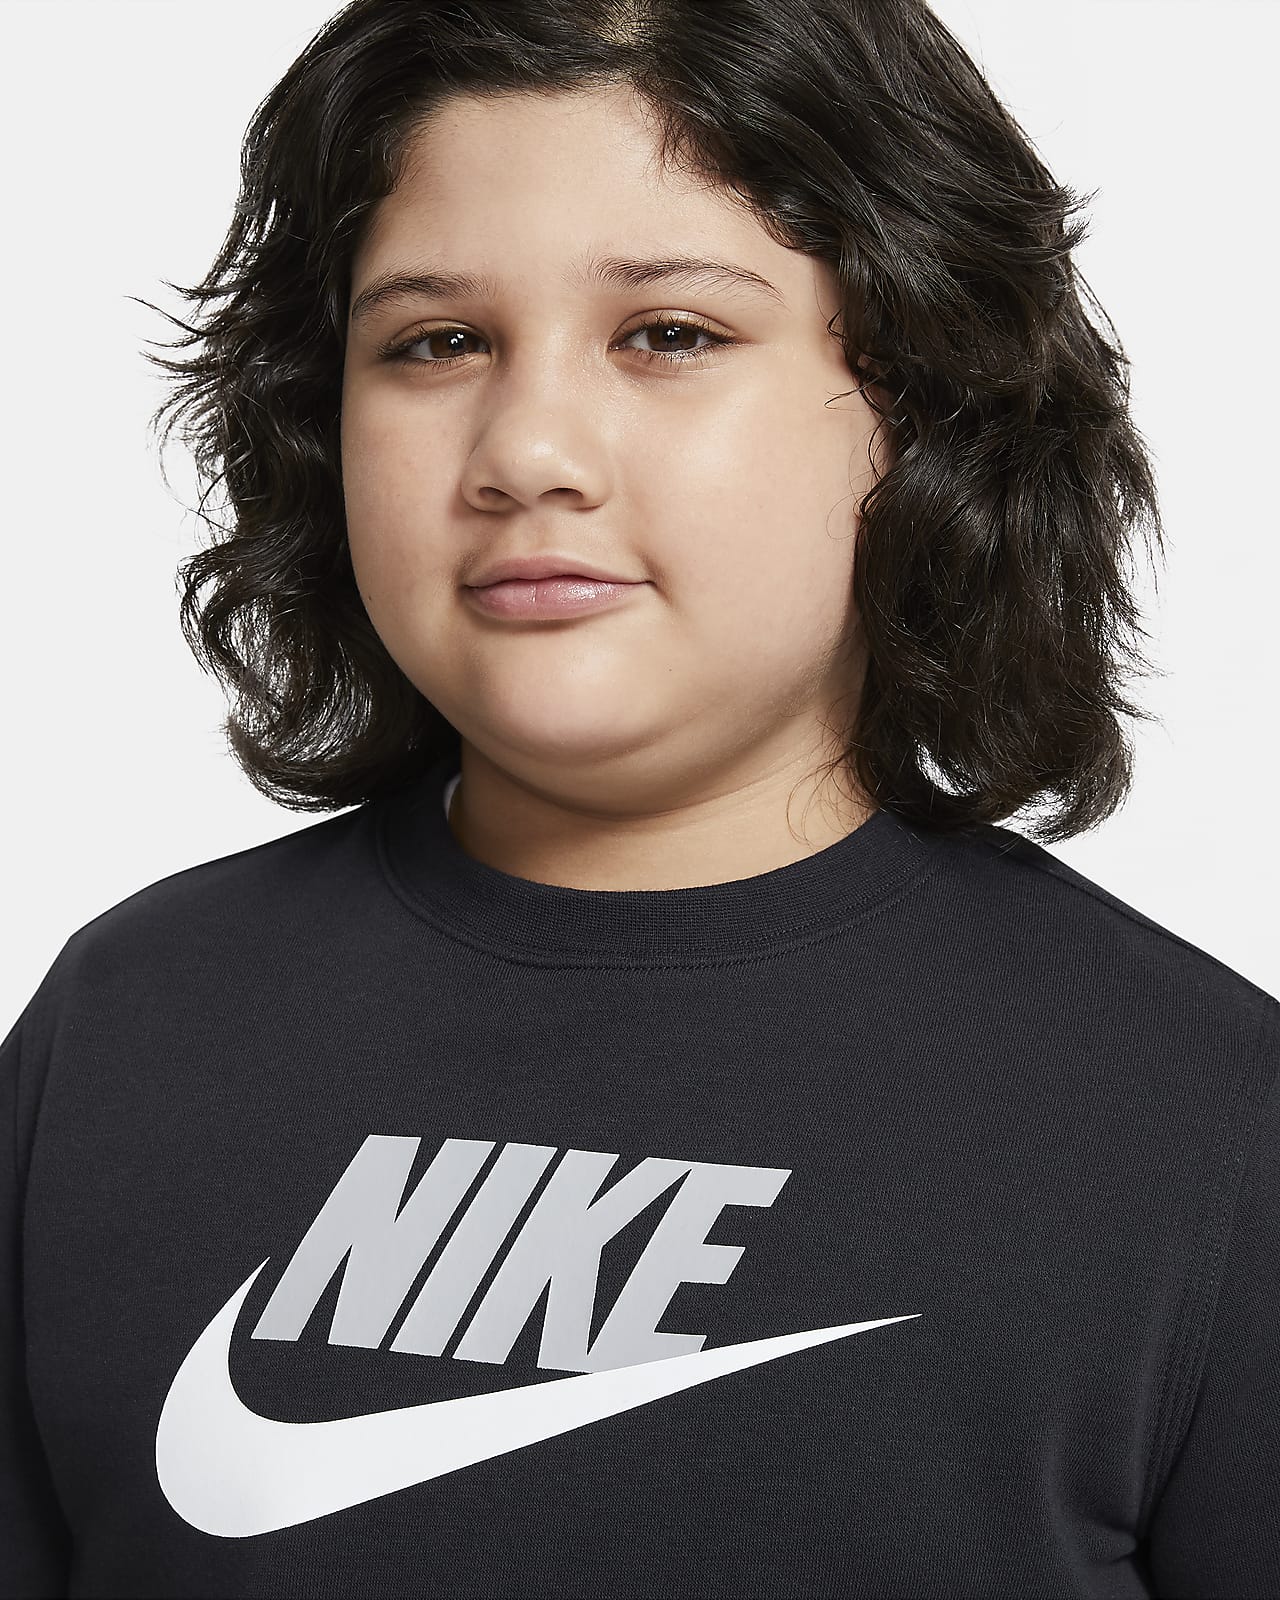 Nike Sportswear Club Fleece Big Kids' (Boys') Crew (Extended Size)